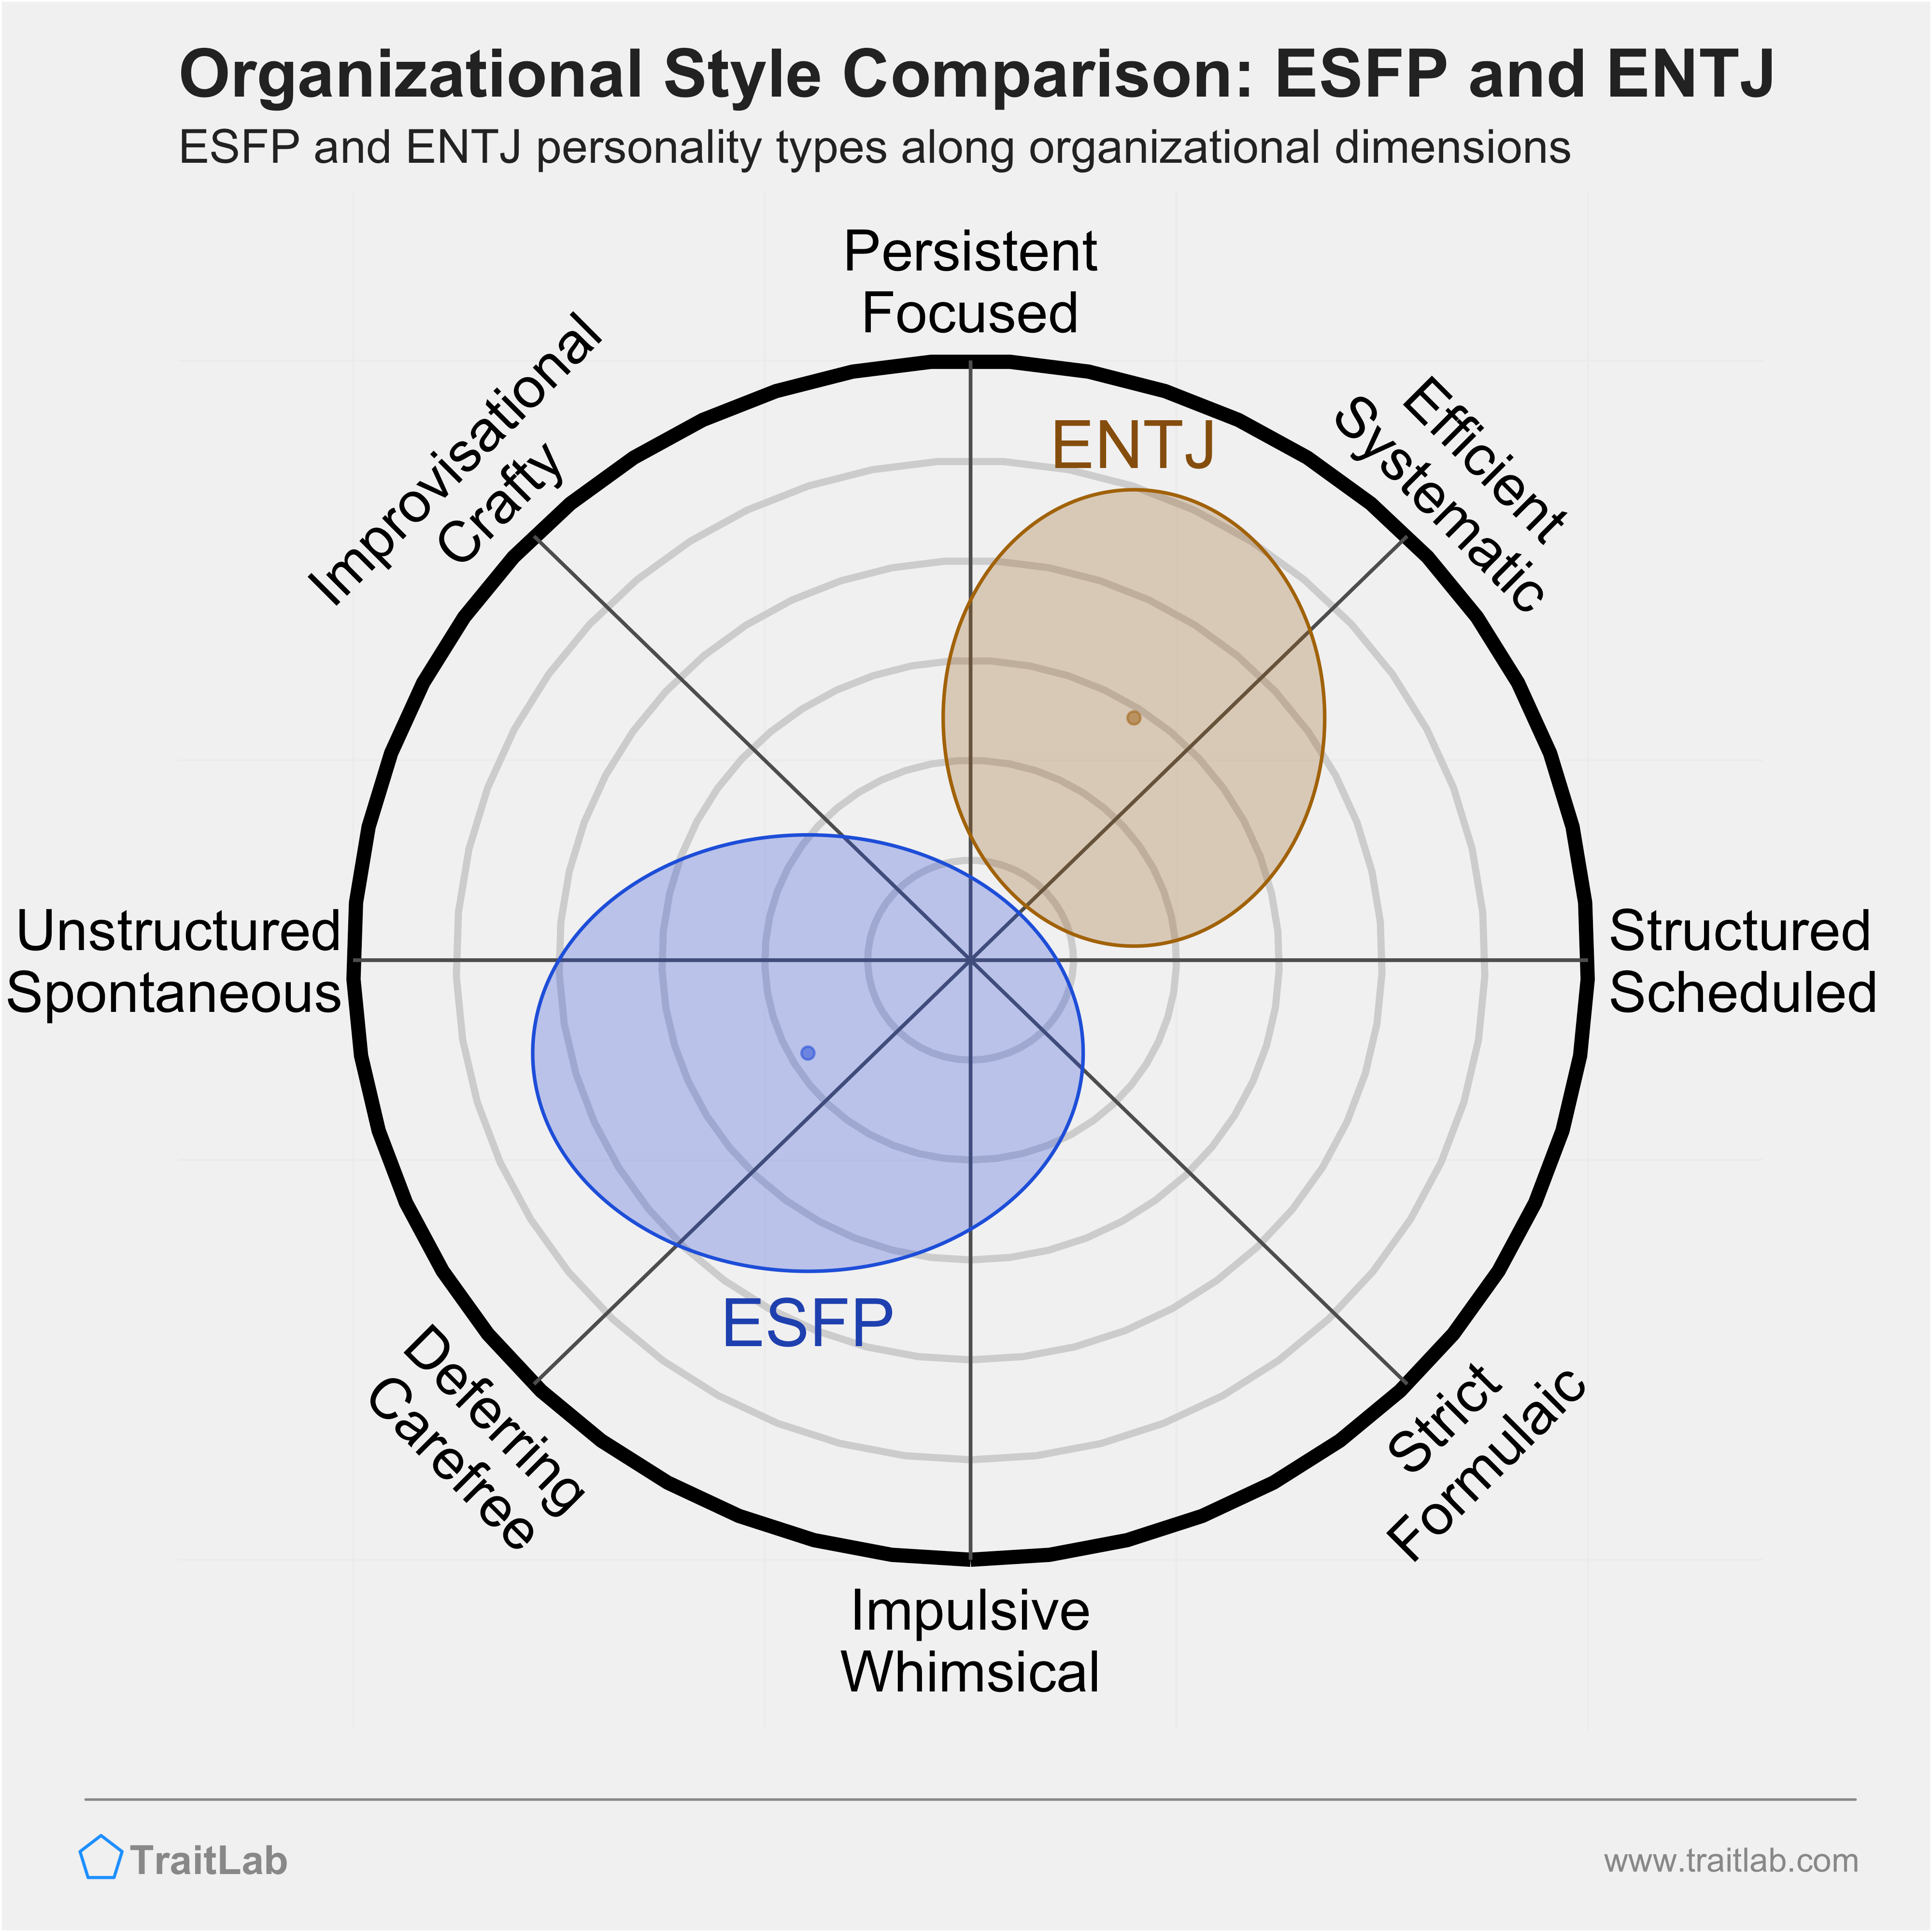 ESFP and ENTJ comparison across organizational dimensions